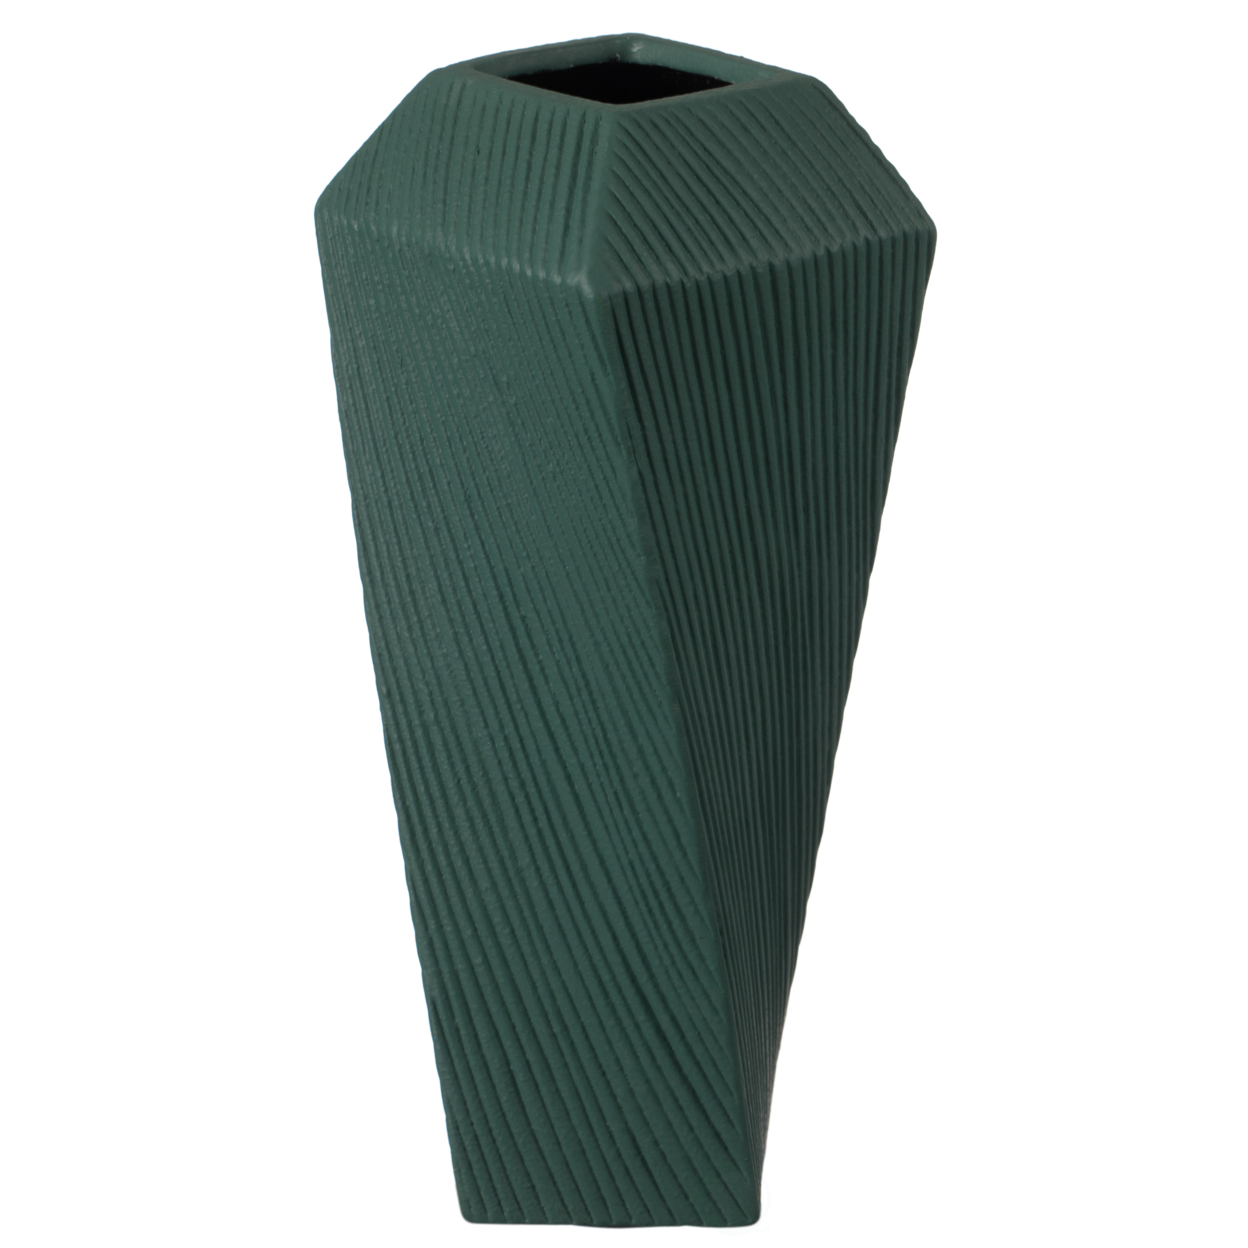 Decorative Ceramic Square Twisted Centerpiece Table Vase - Green